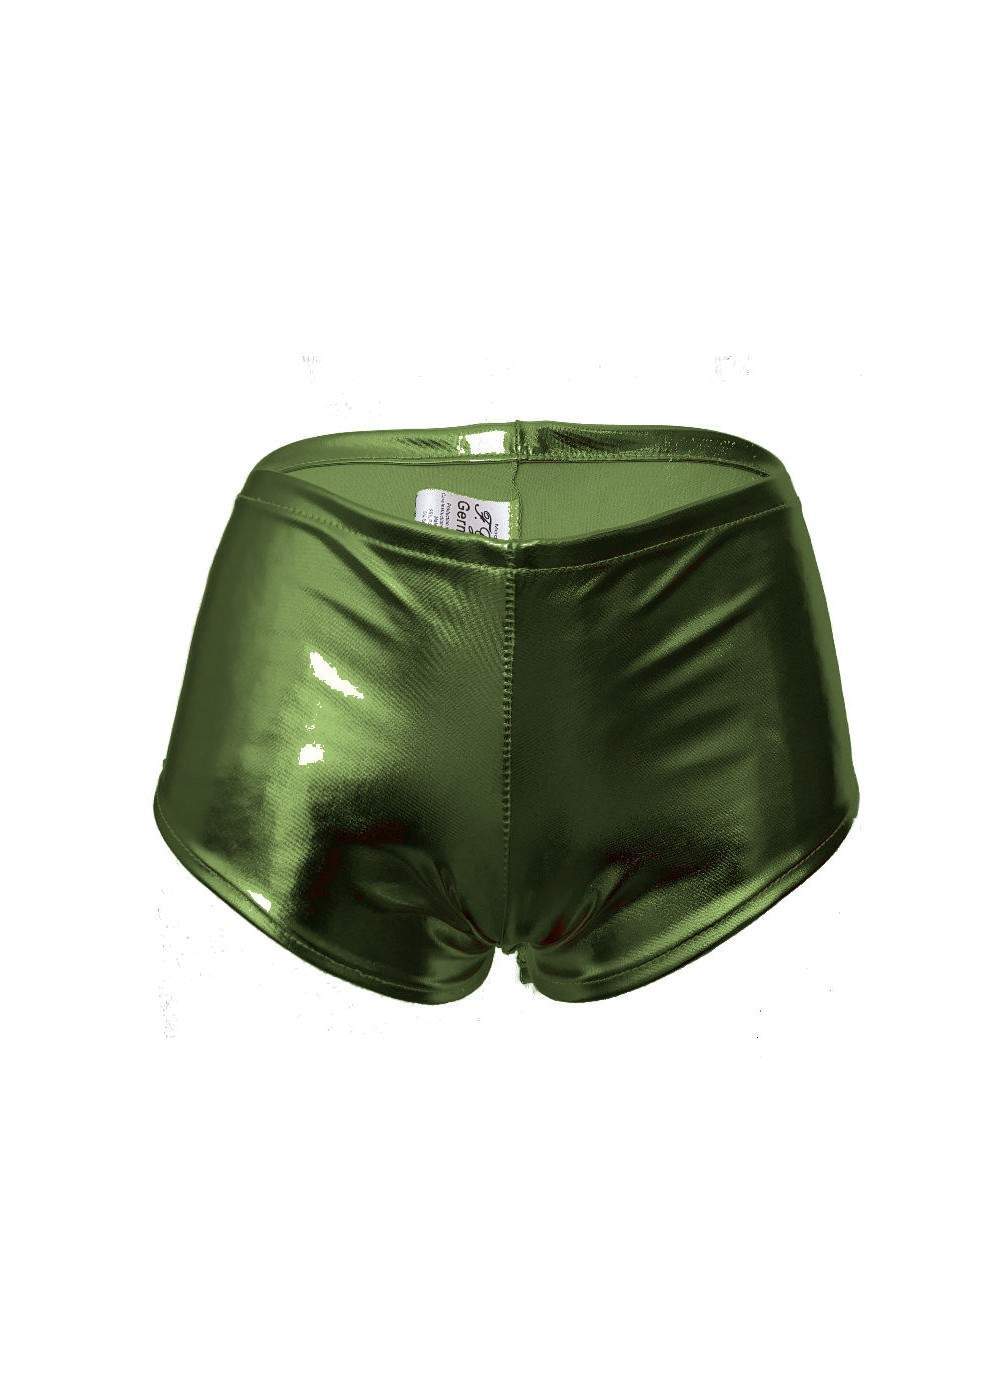 Leder-Optik grüne Hotpants Metallic Größen 34 - 42 Rabatt 11% - 